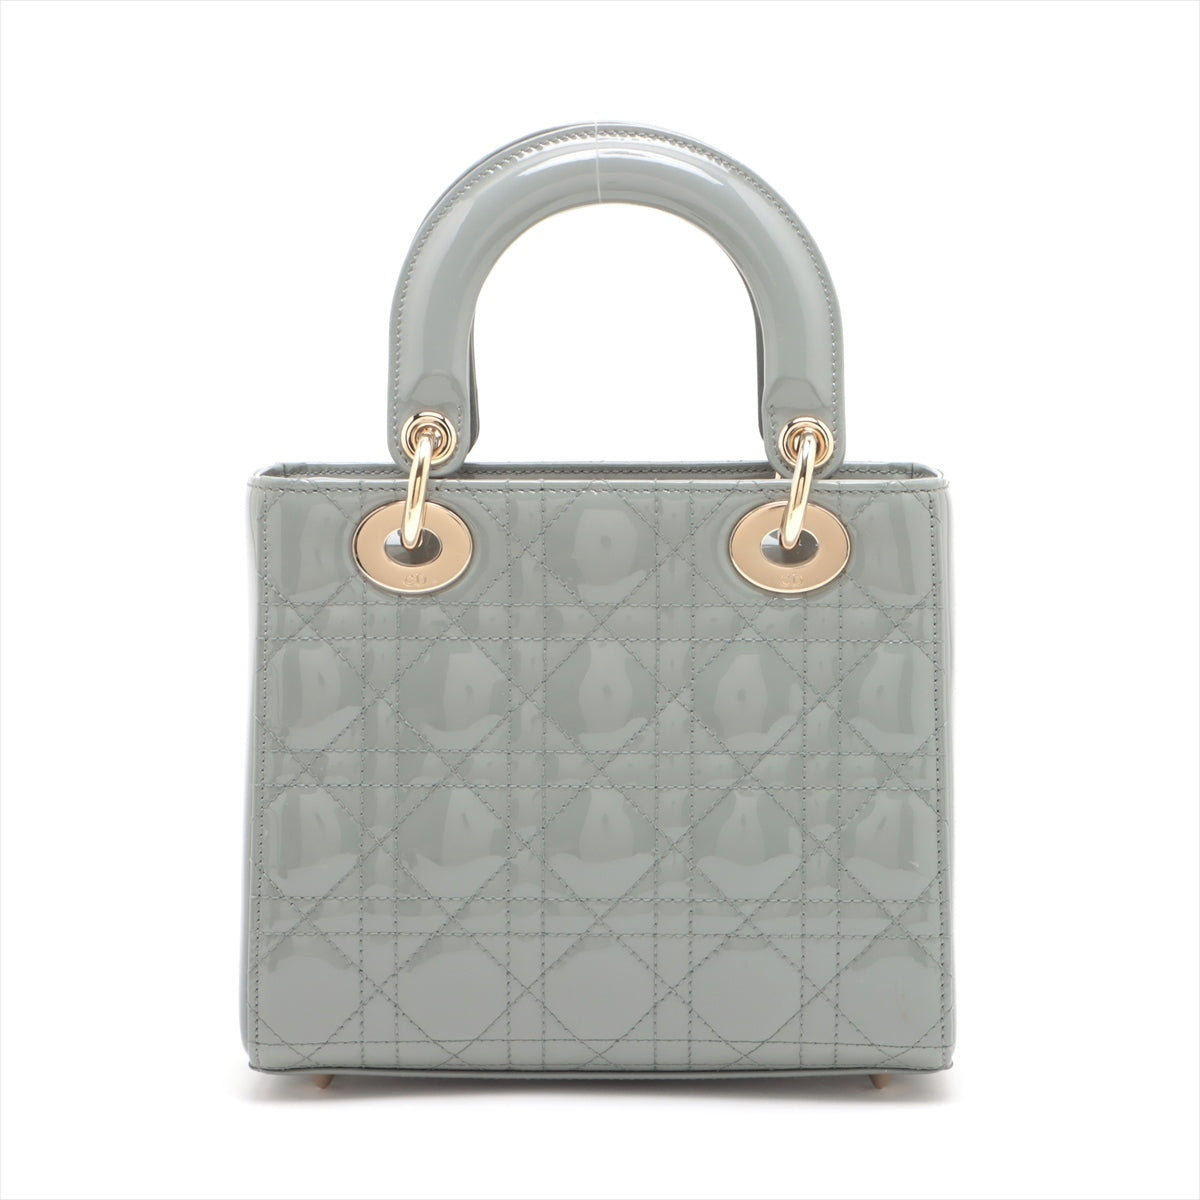 Christian Dior Lady Dior Cannage Patent leather 2way handbag Grey